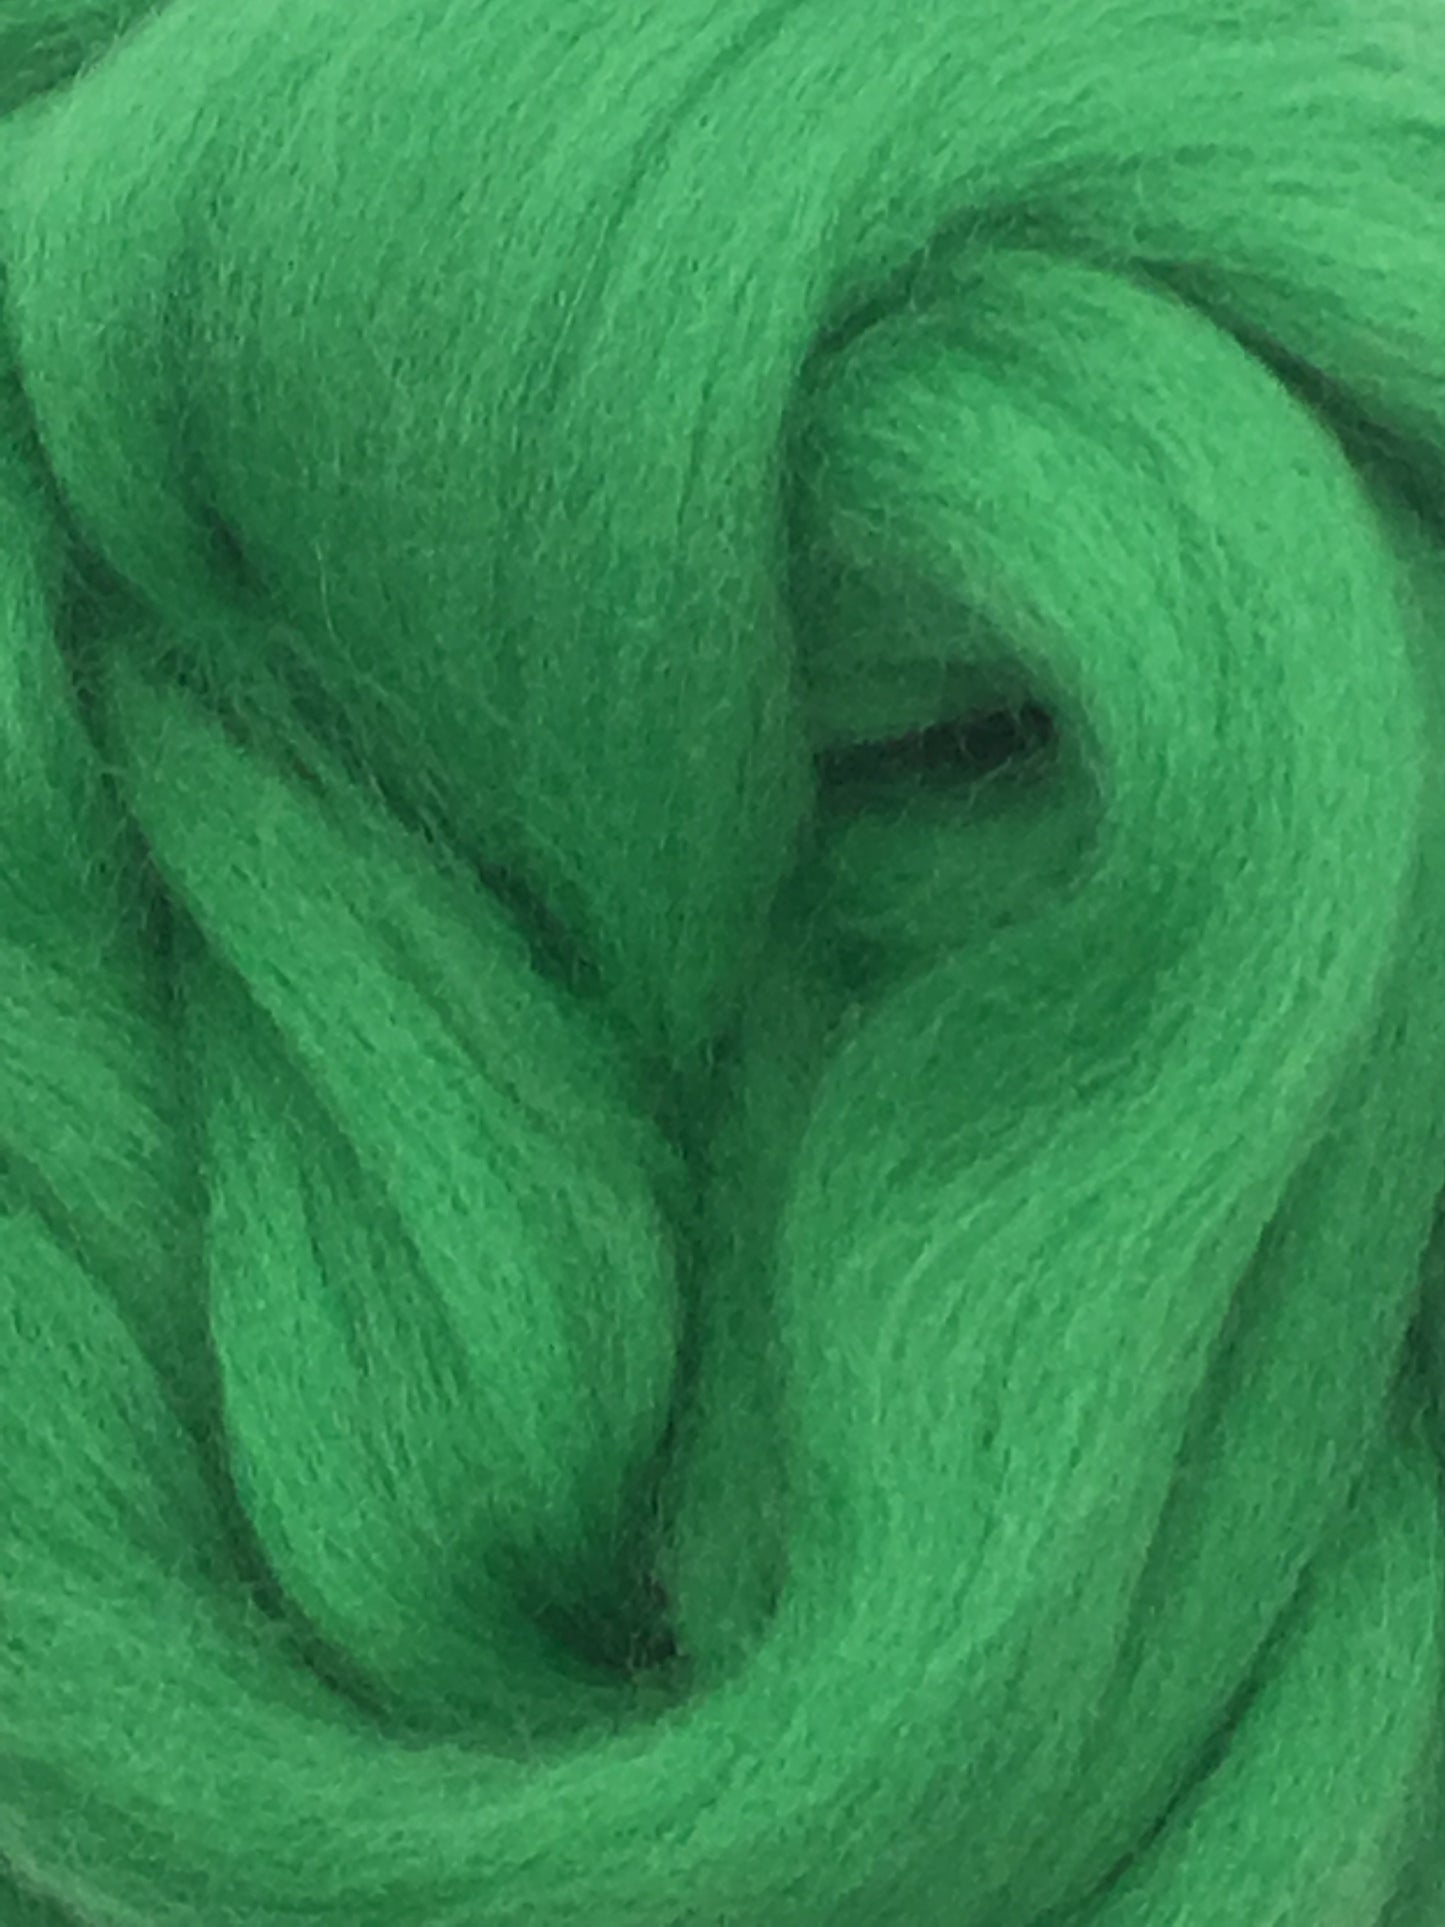 Kelly  Green Merino  Wool Top Roving (Shamrock Green)